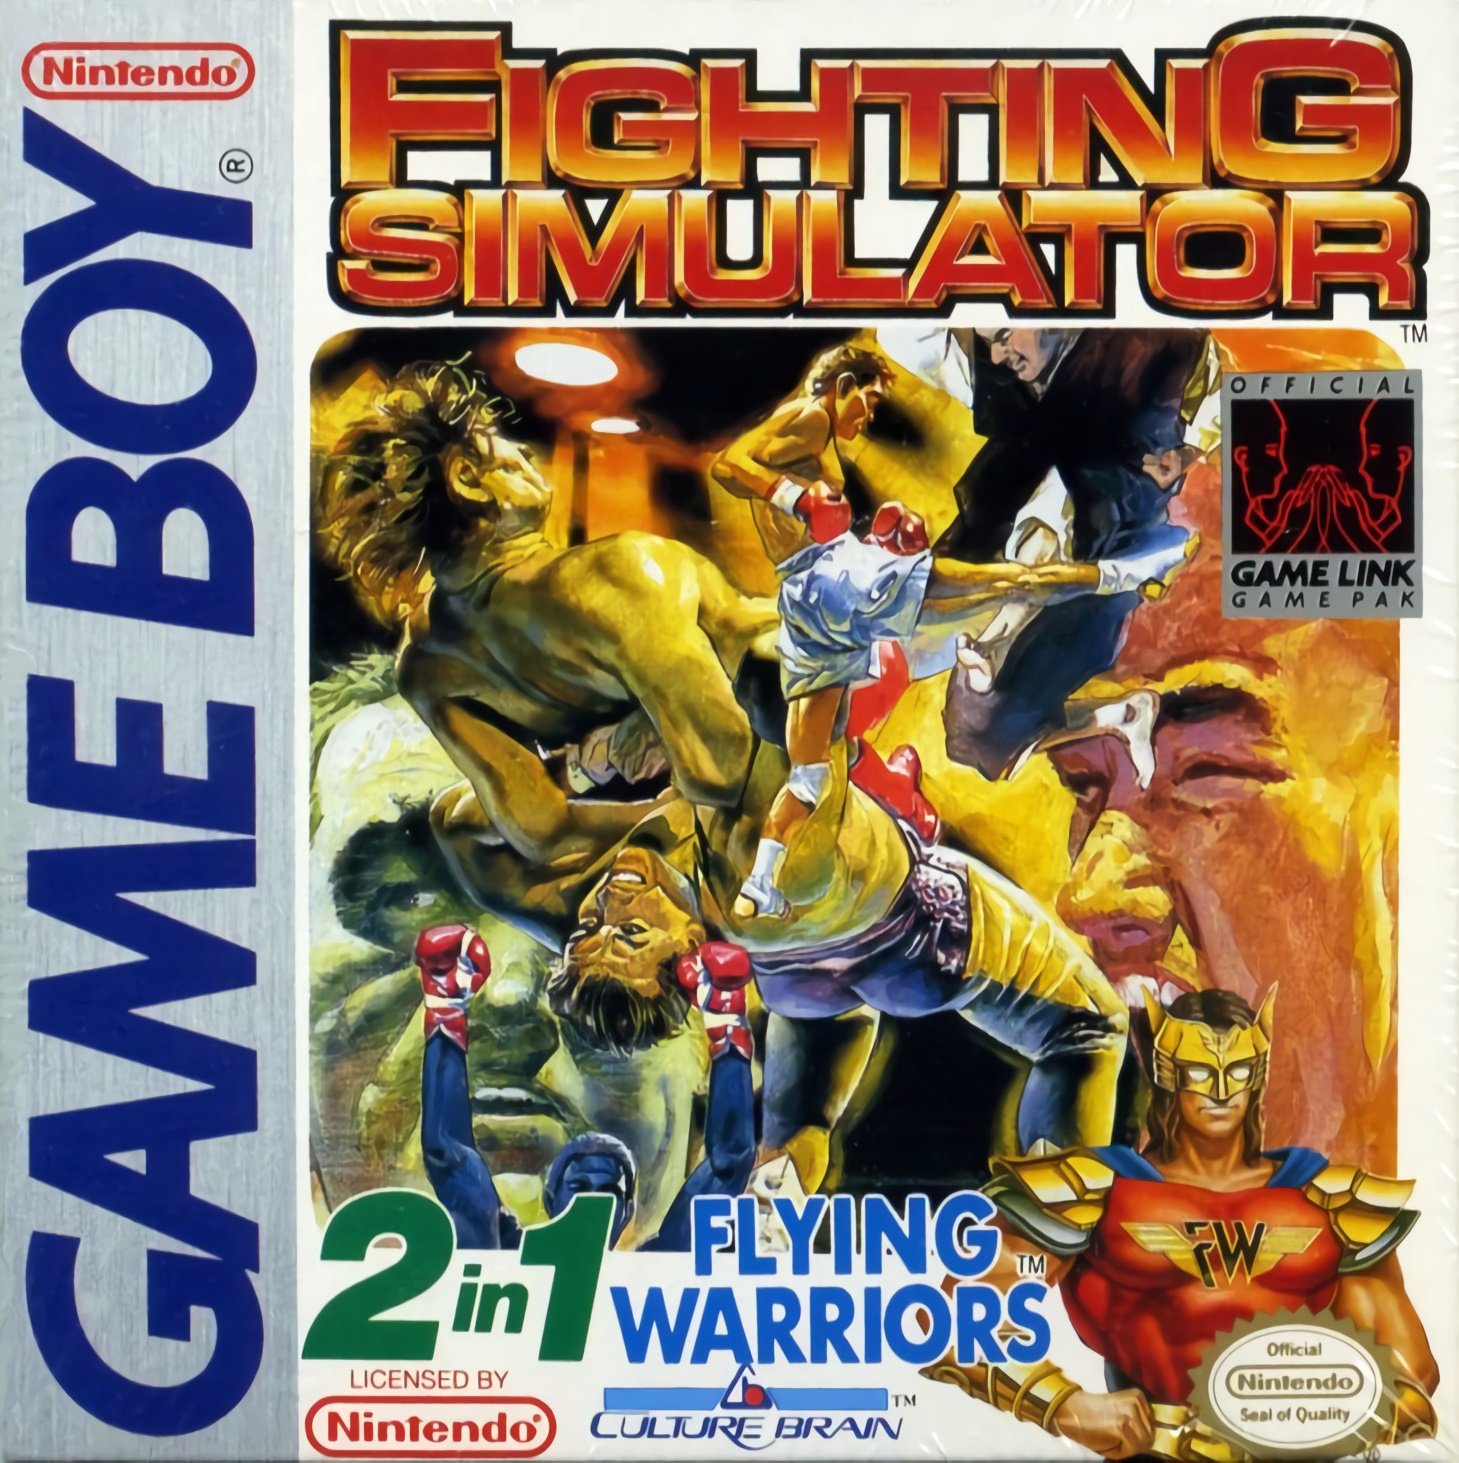 Fighting Simulator 2-in-1: Flying Warriors